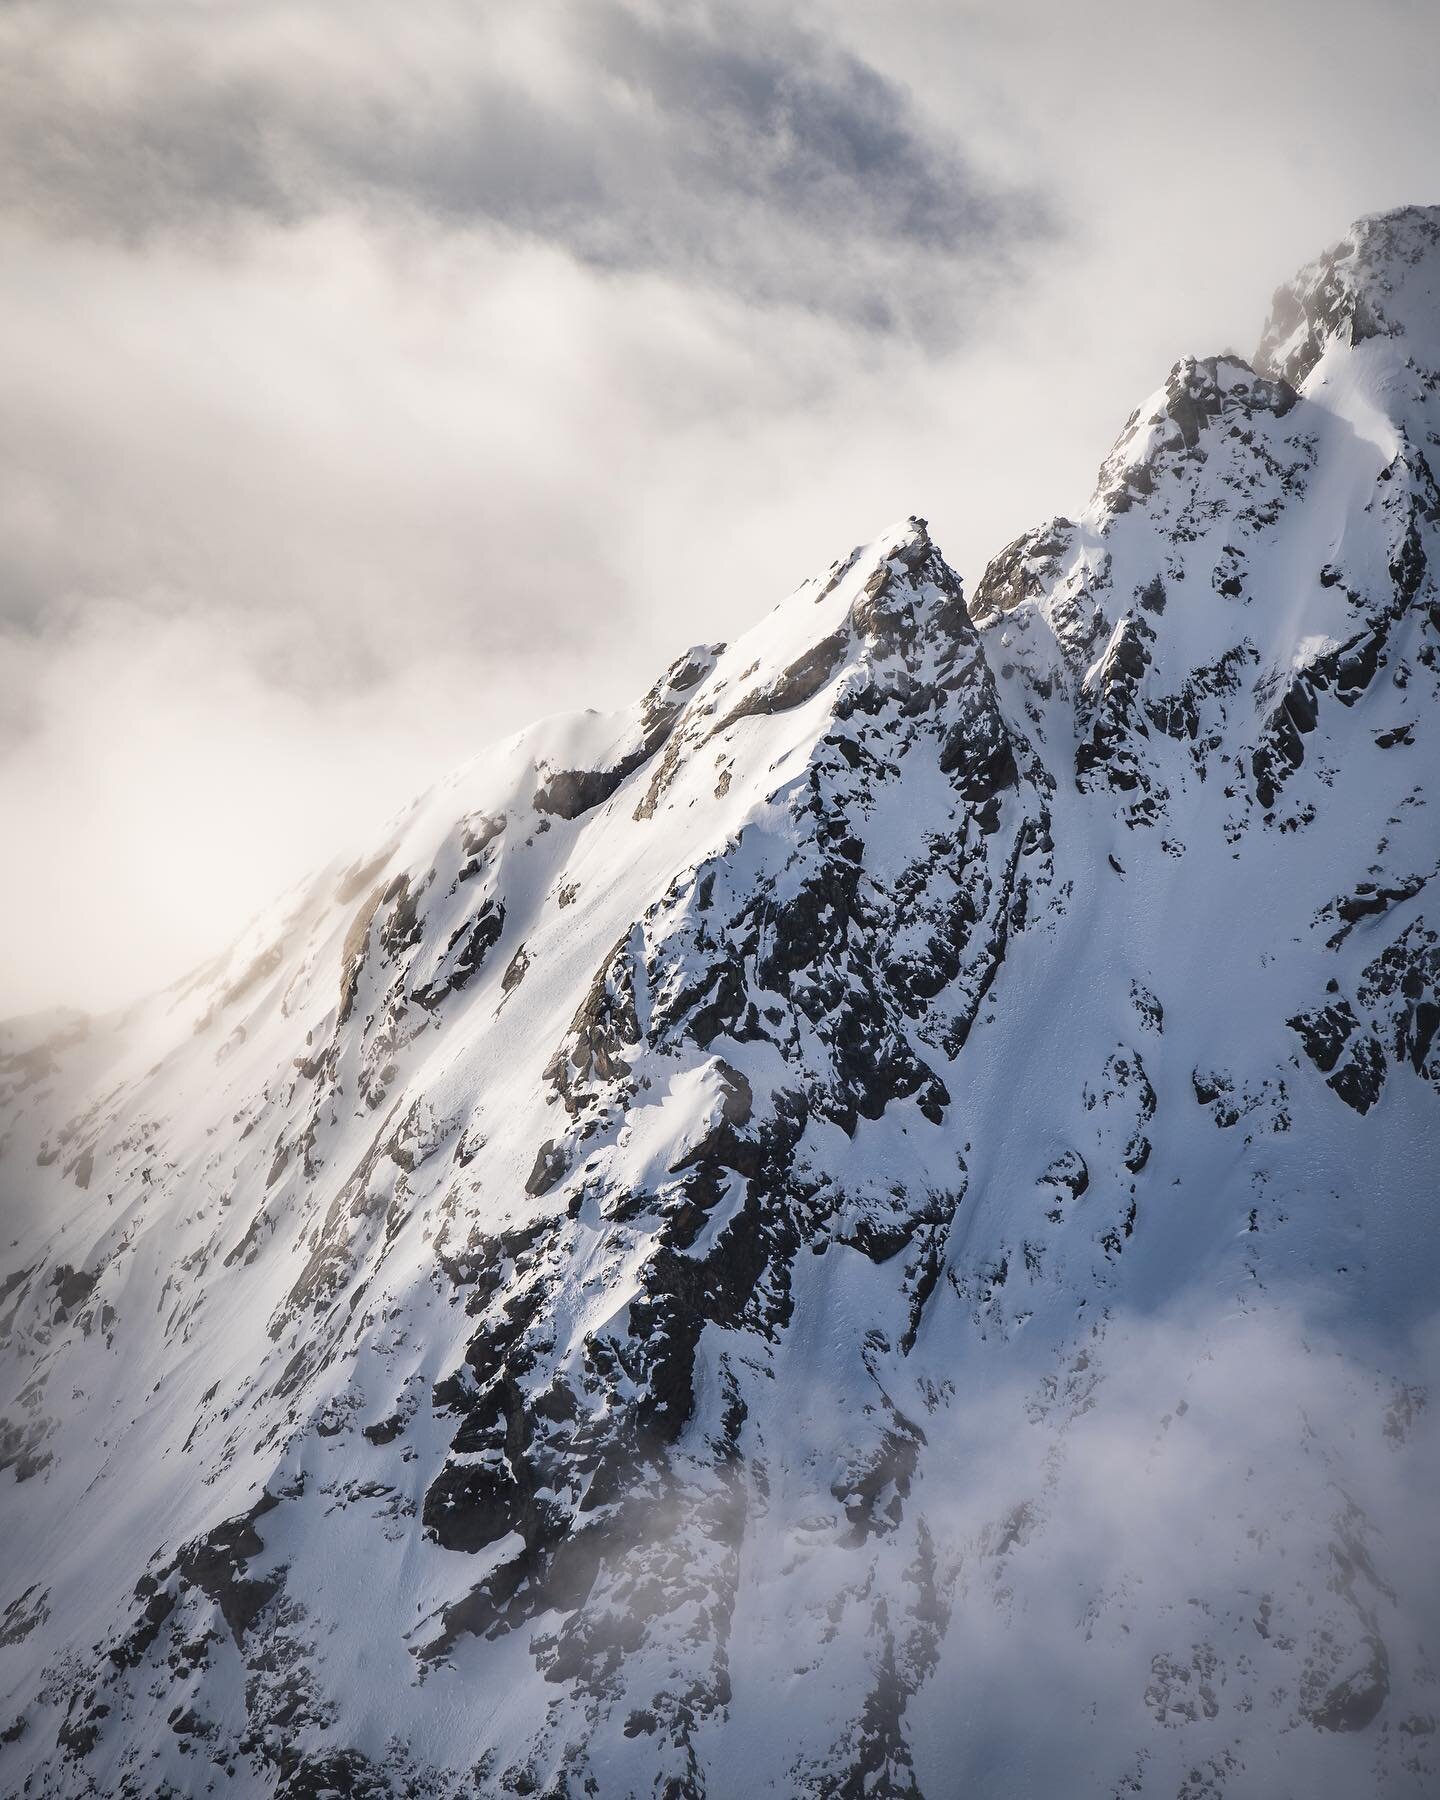 Clouds drifting around the peaks of the Austrian Alps on a stunning morning last weekend.

#tirol #tyrol #visittirol #austria #&ouml;sterreich #morningview #clouds #stubaieralpen #stubai #stubaital #visitaustria #austrianalps #alpen #alps #berge #ski